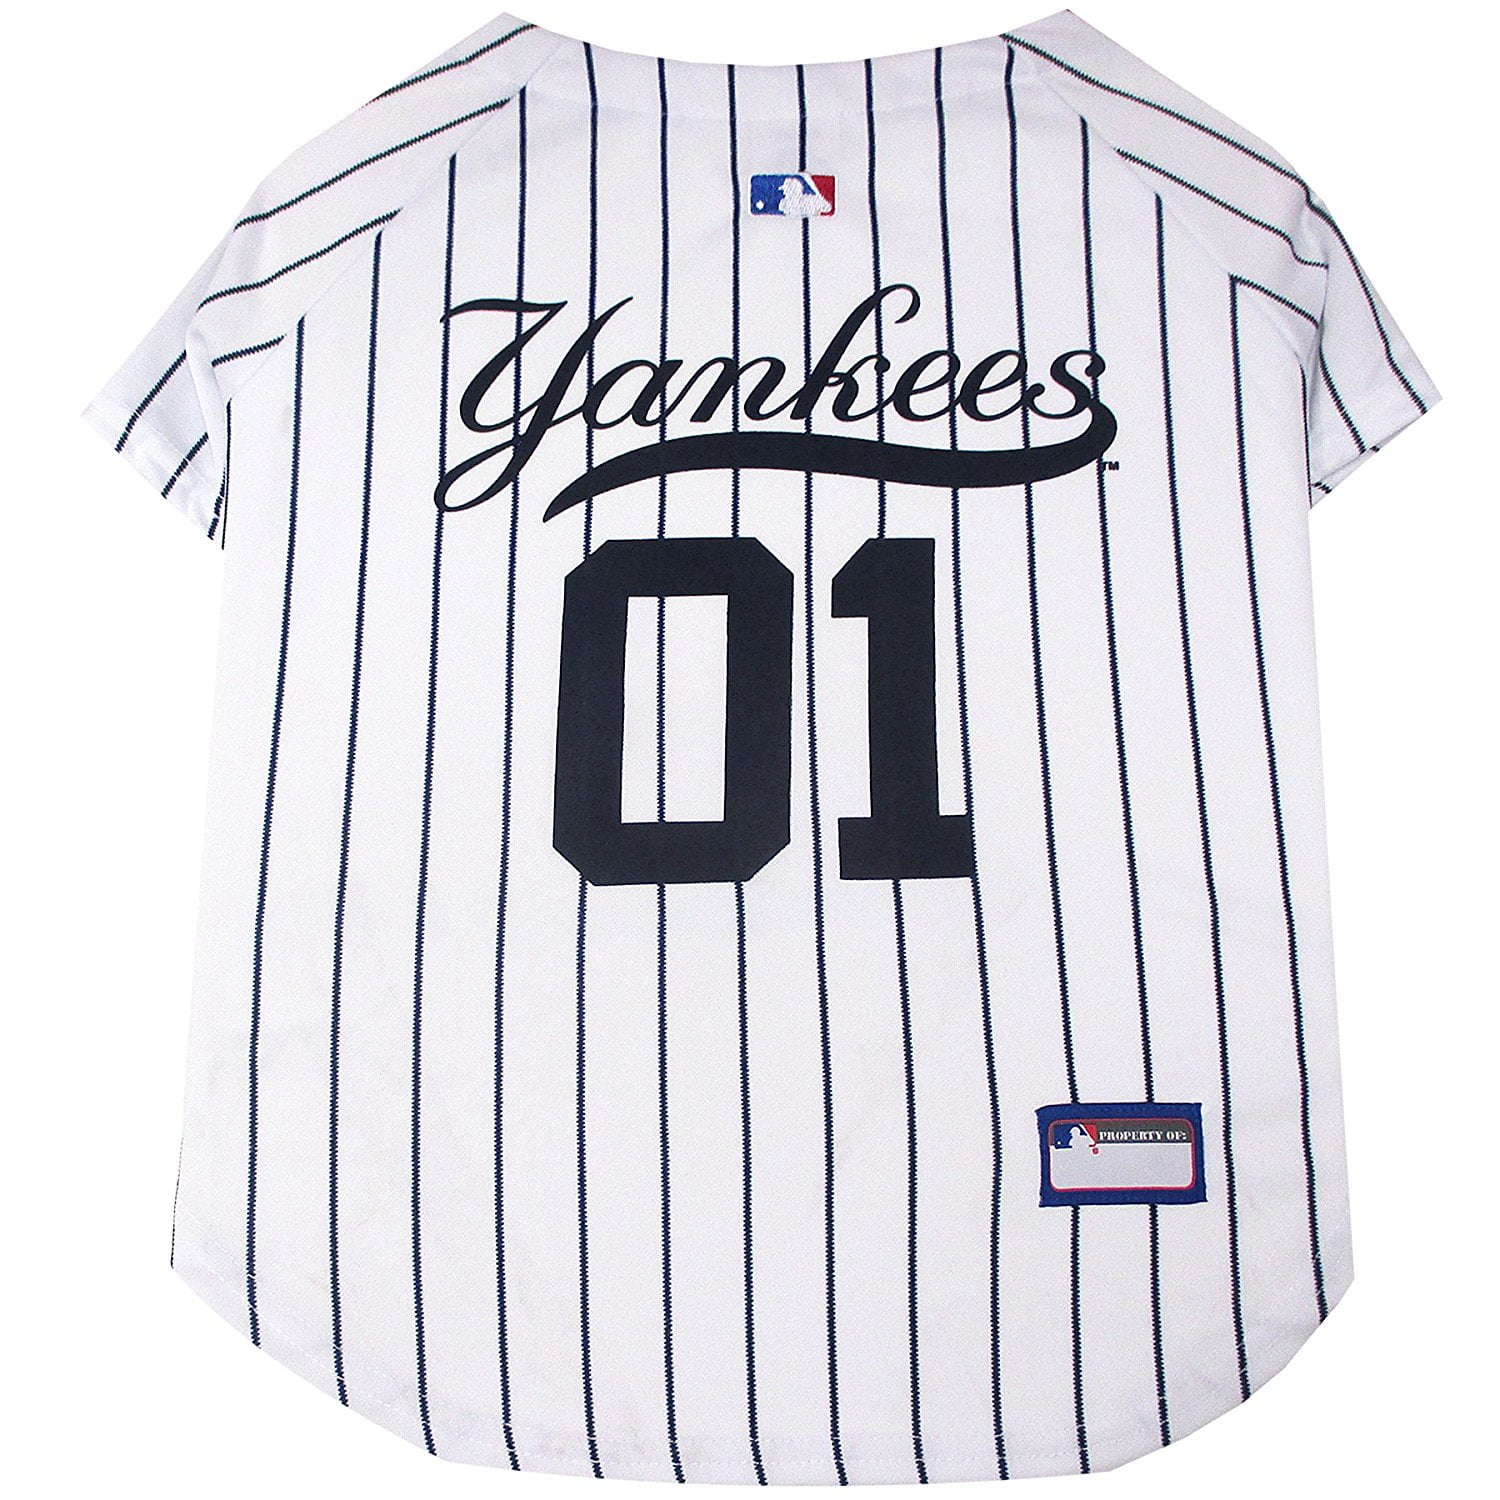 yankees new york jersey